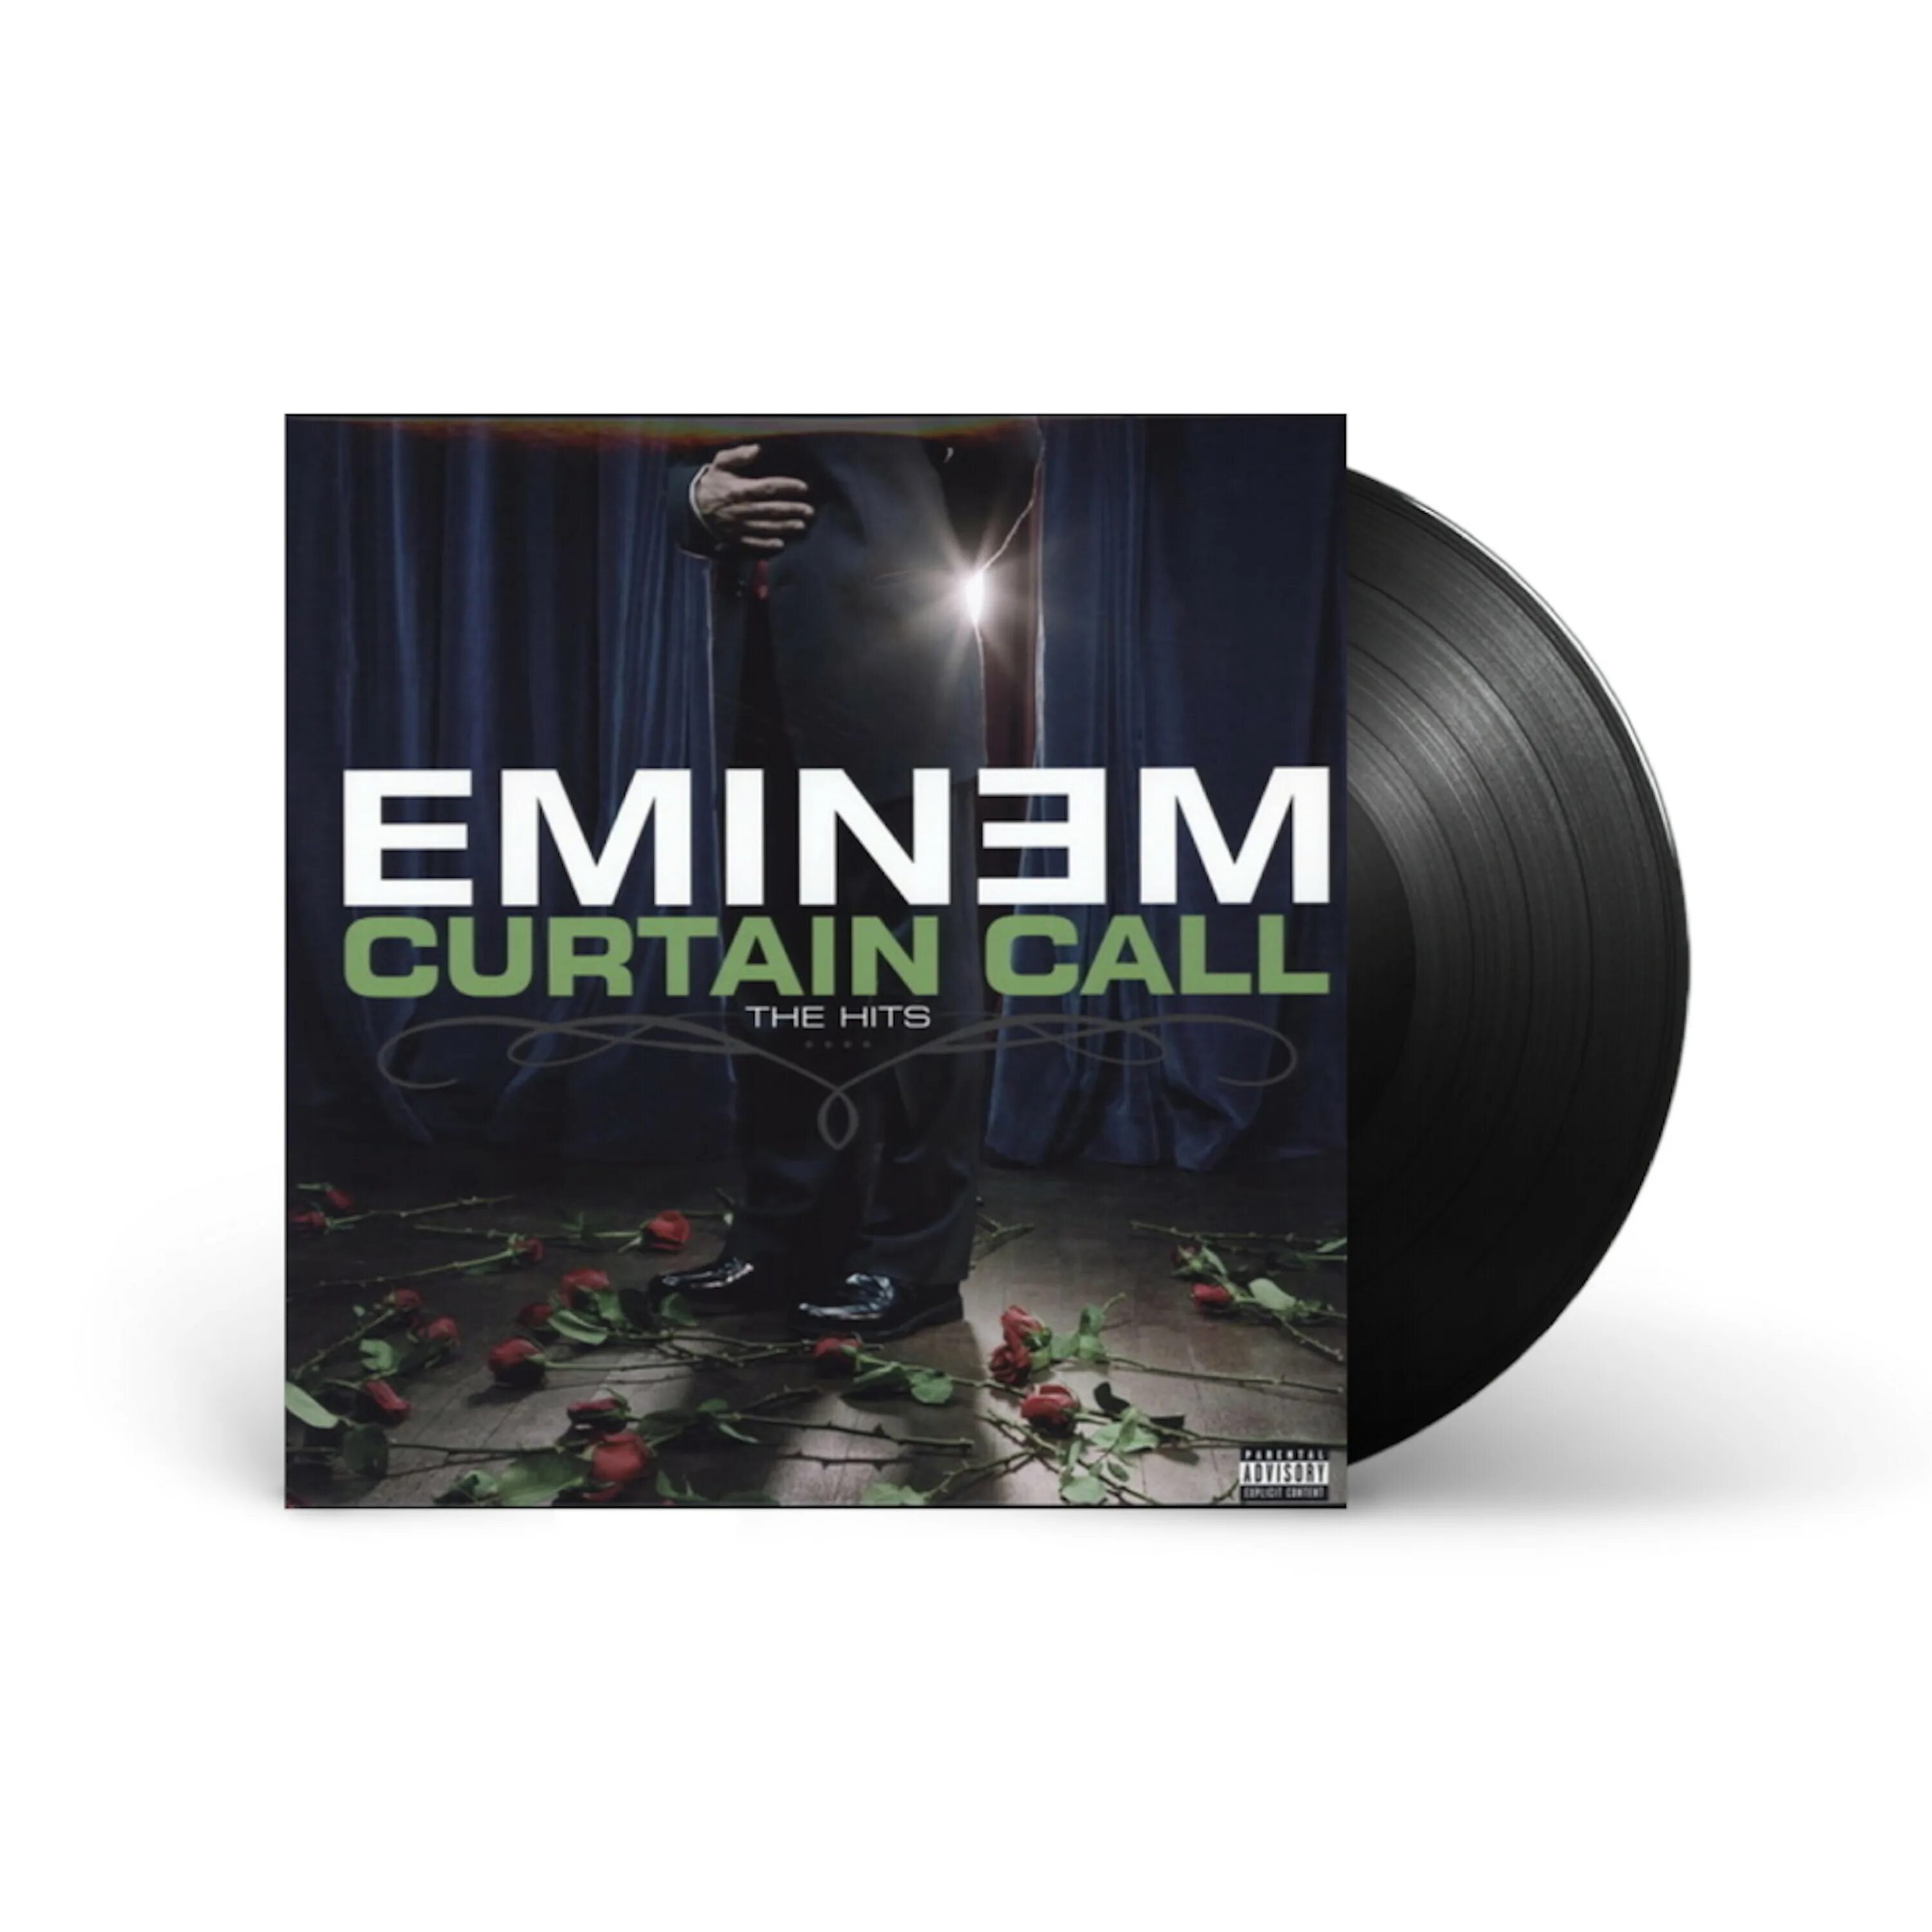 Eminem curtain. Curtain Call 2 Эминем. Curtain Call: the Hits Эминем. Eminem Curtain Call the Hits обложка. Eminem Curtain Call the Hits винил.